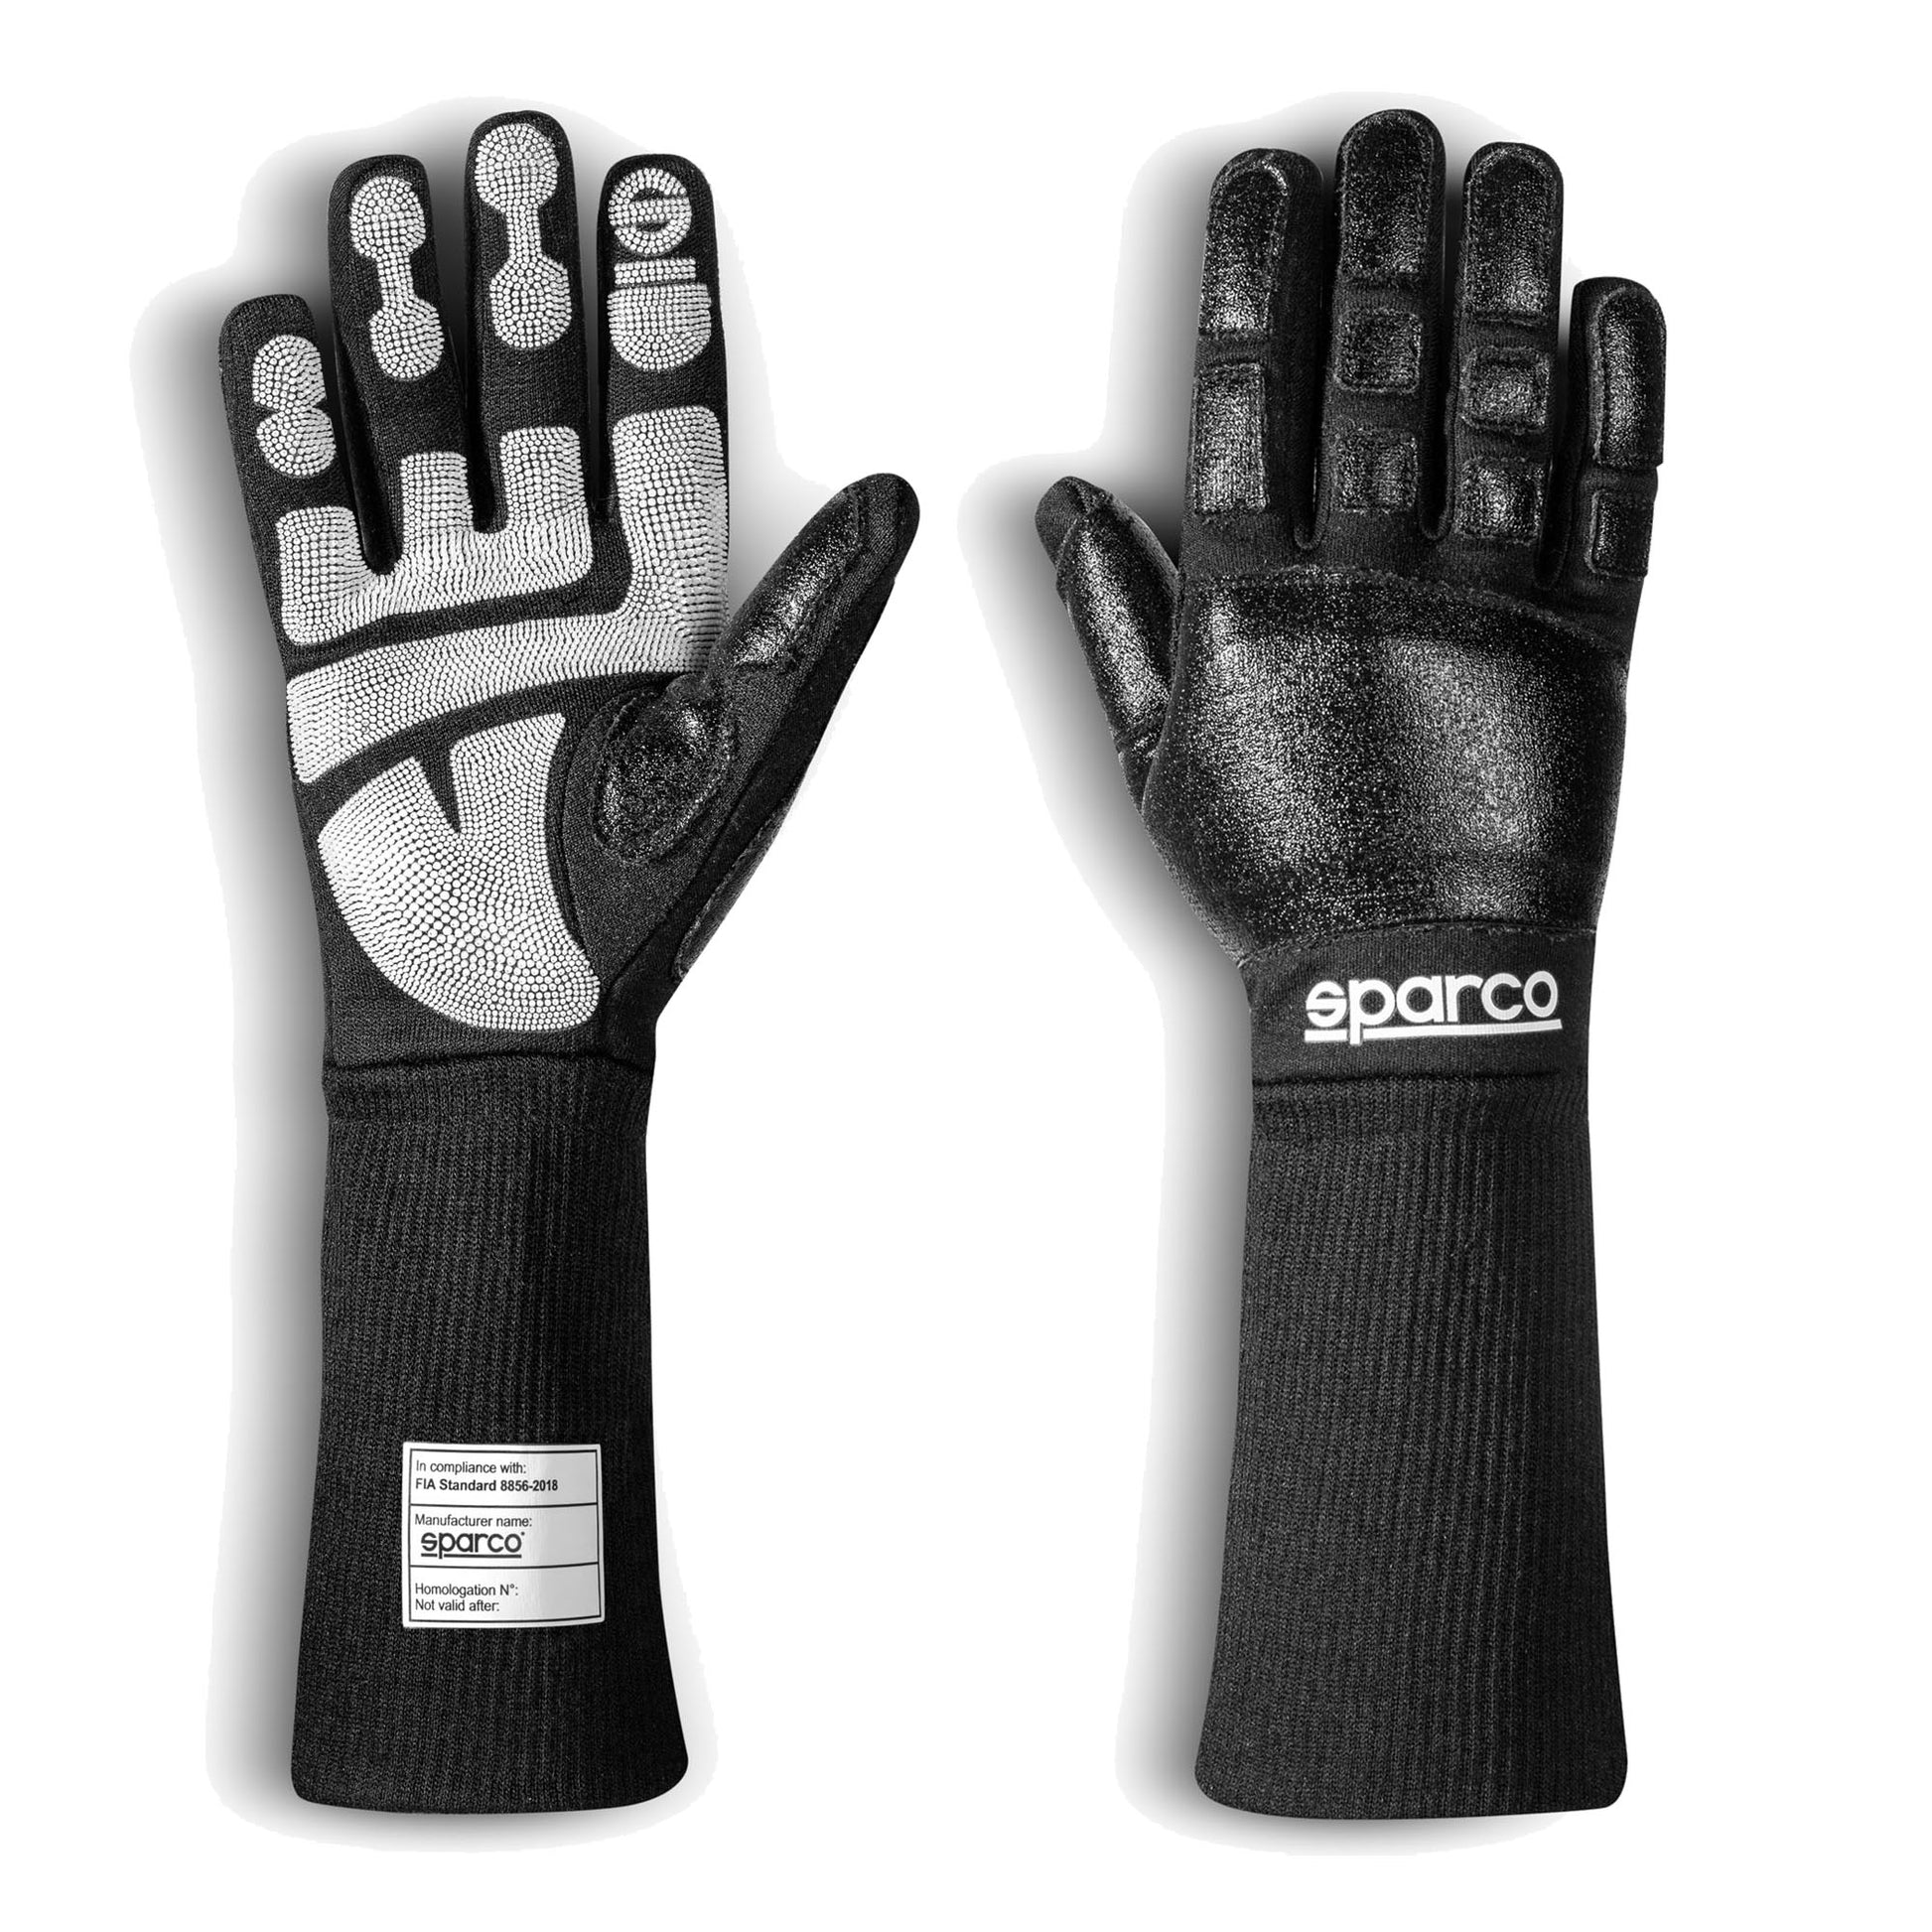 Sparco Meca 3 Pit Gloves at CMS –